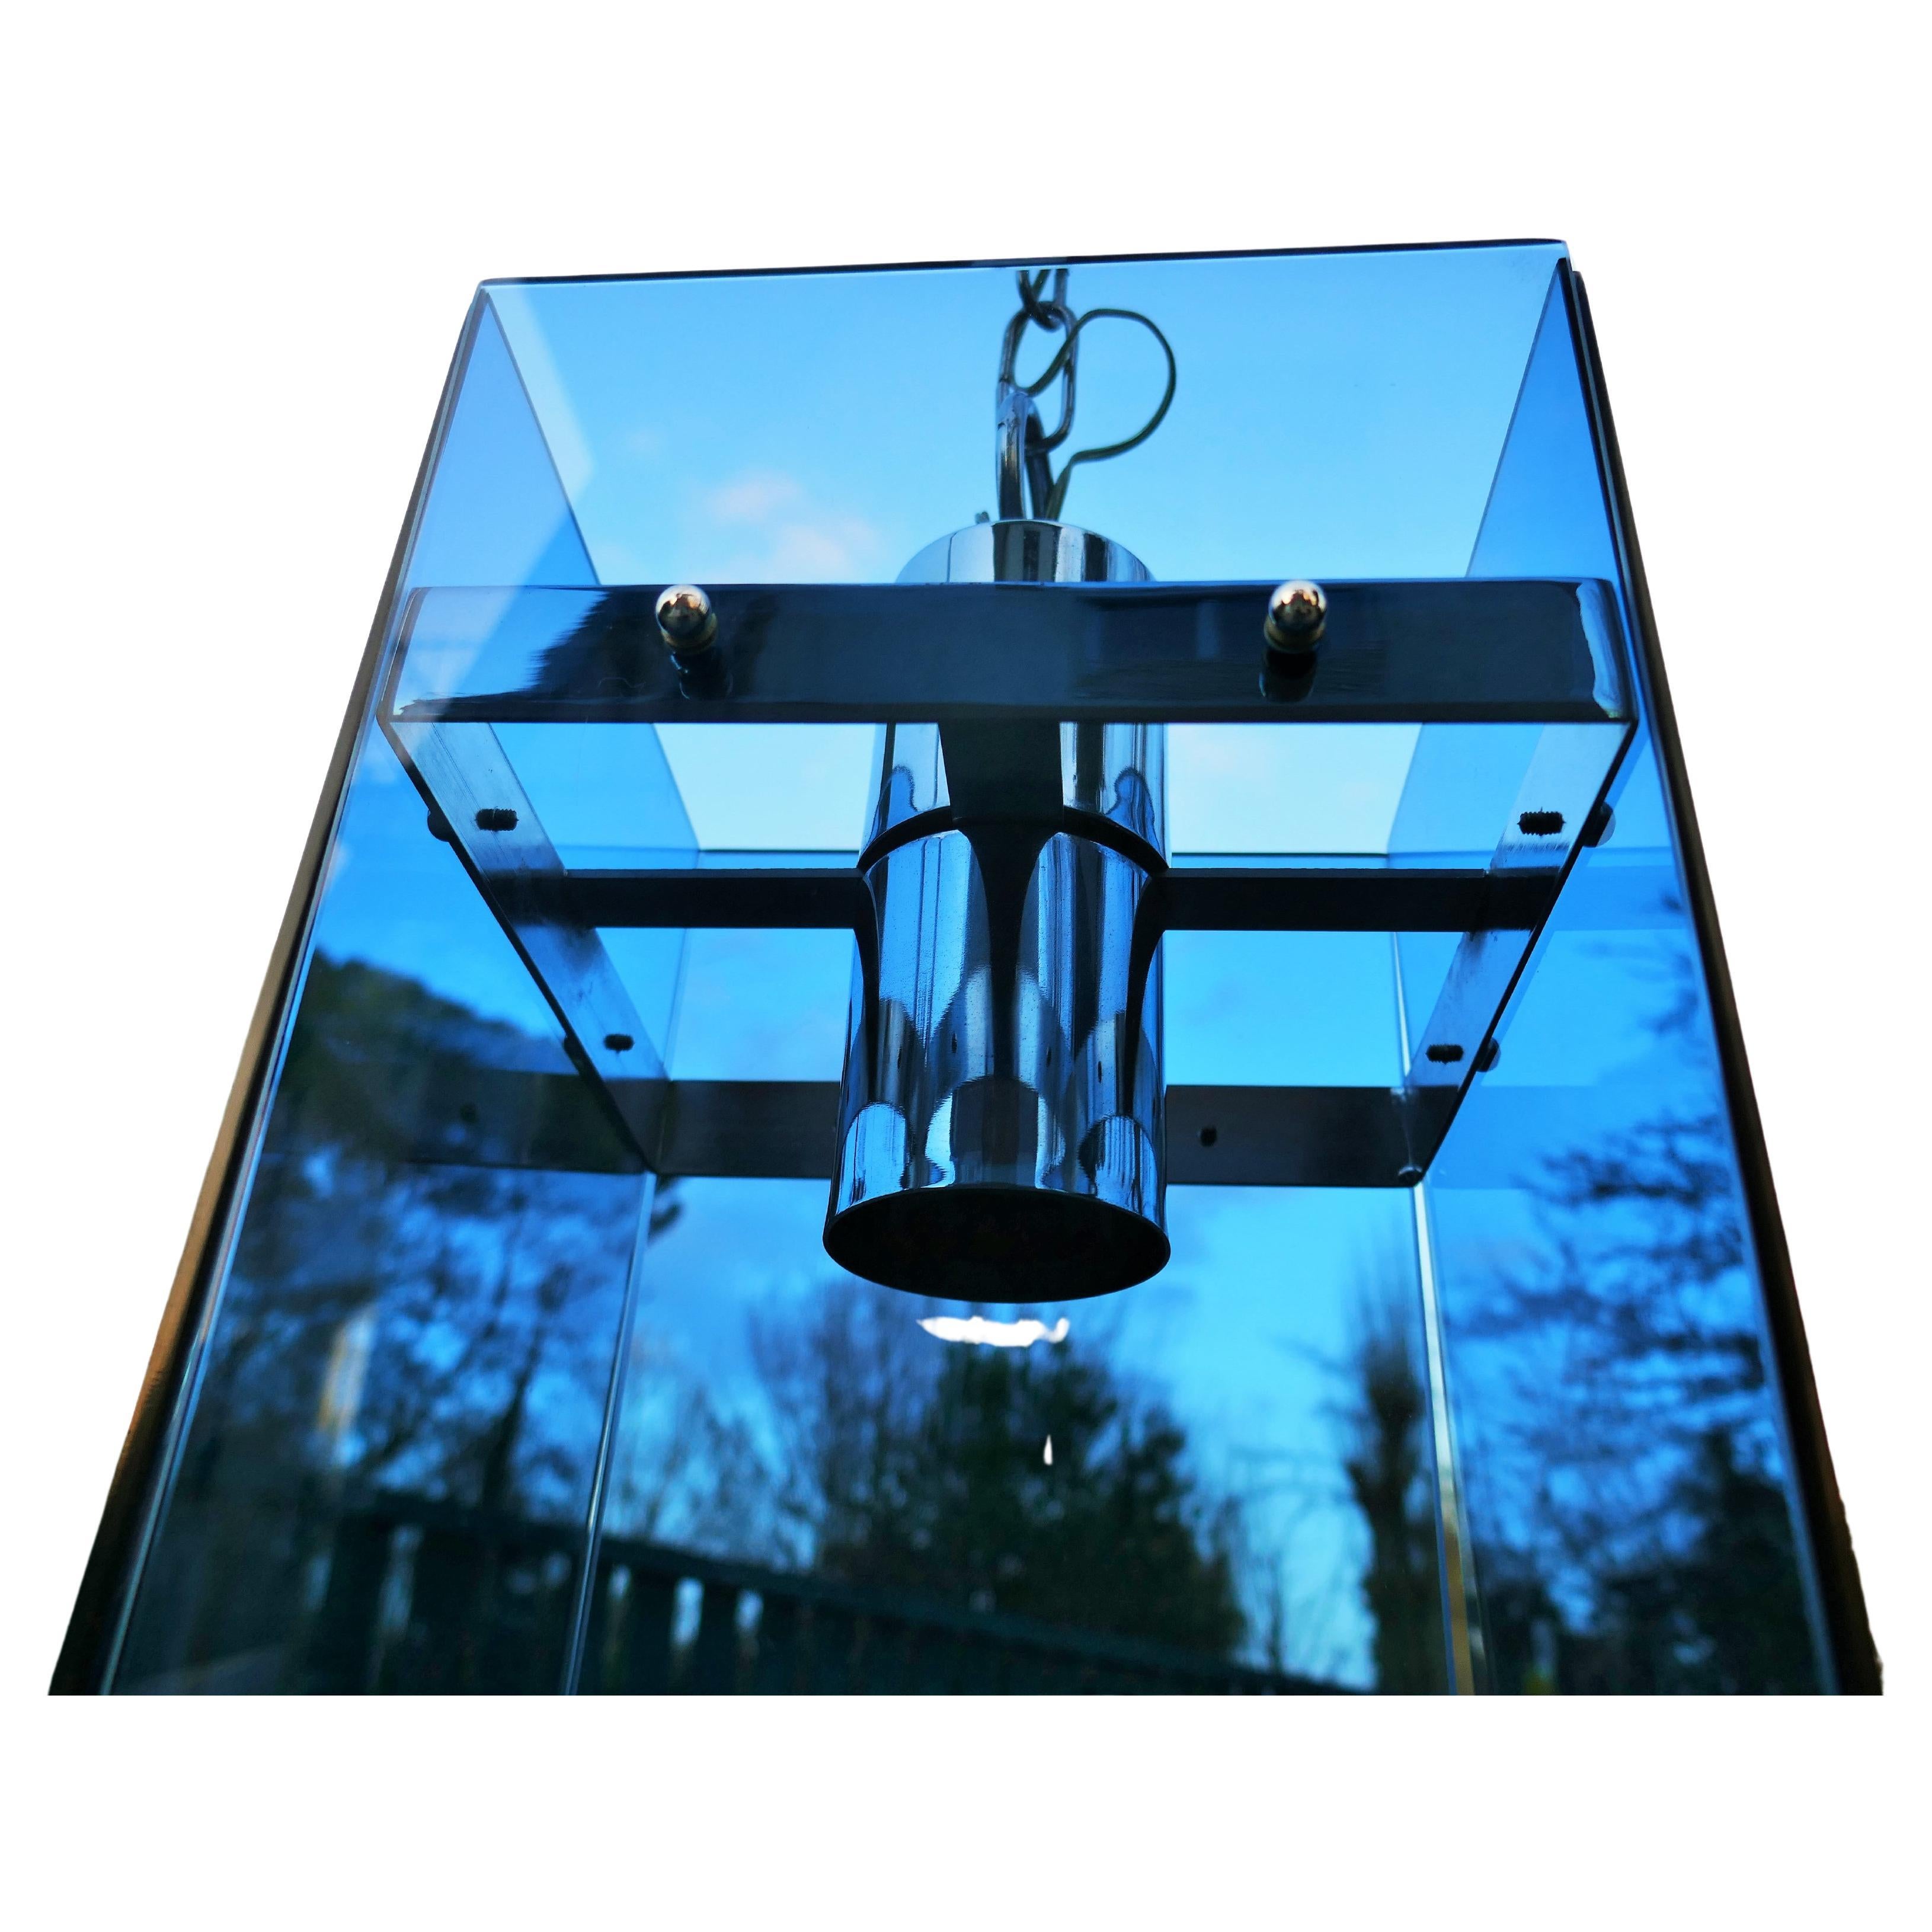 Pendant lamp in the style of Fontana Arte Veca Cristal Art For Sale 1